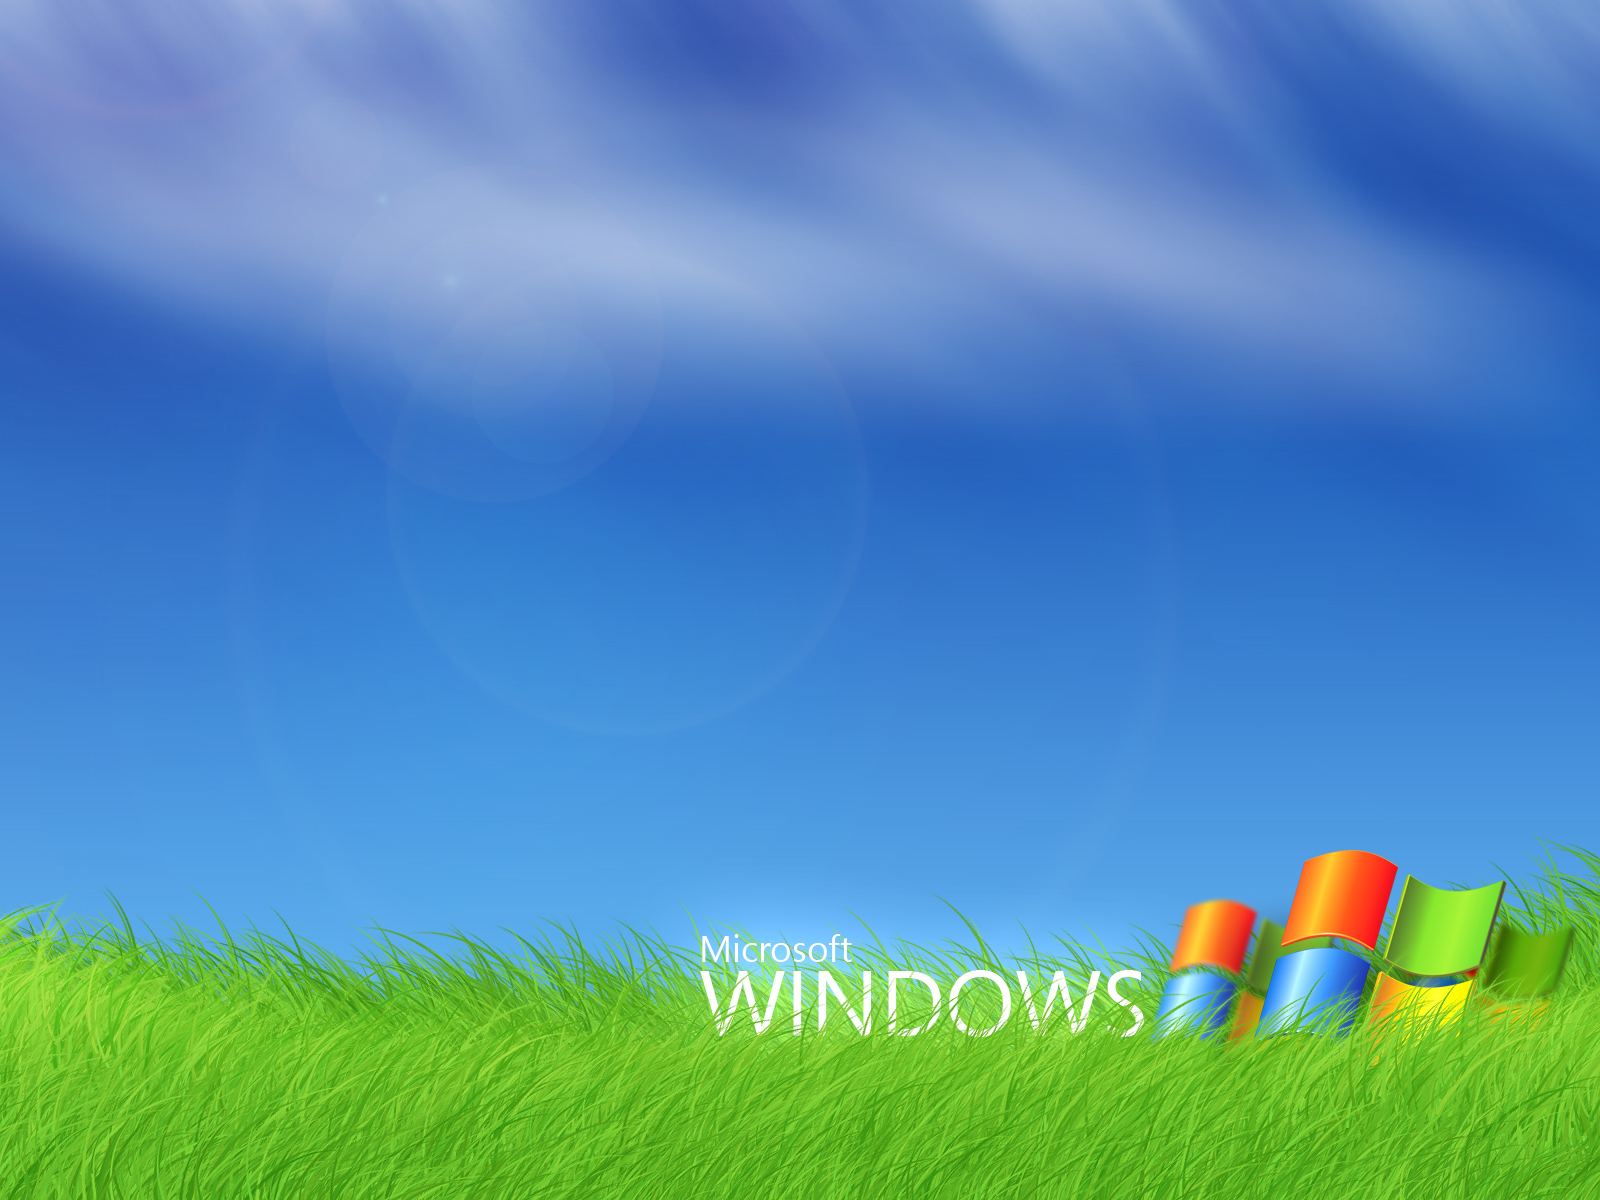 Microsoft Windows - Windows Wallpaper Hd , HD Wallpaper & Backgrounds